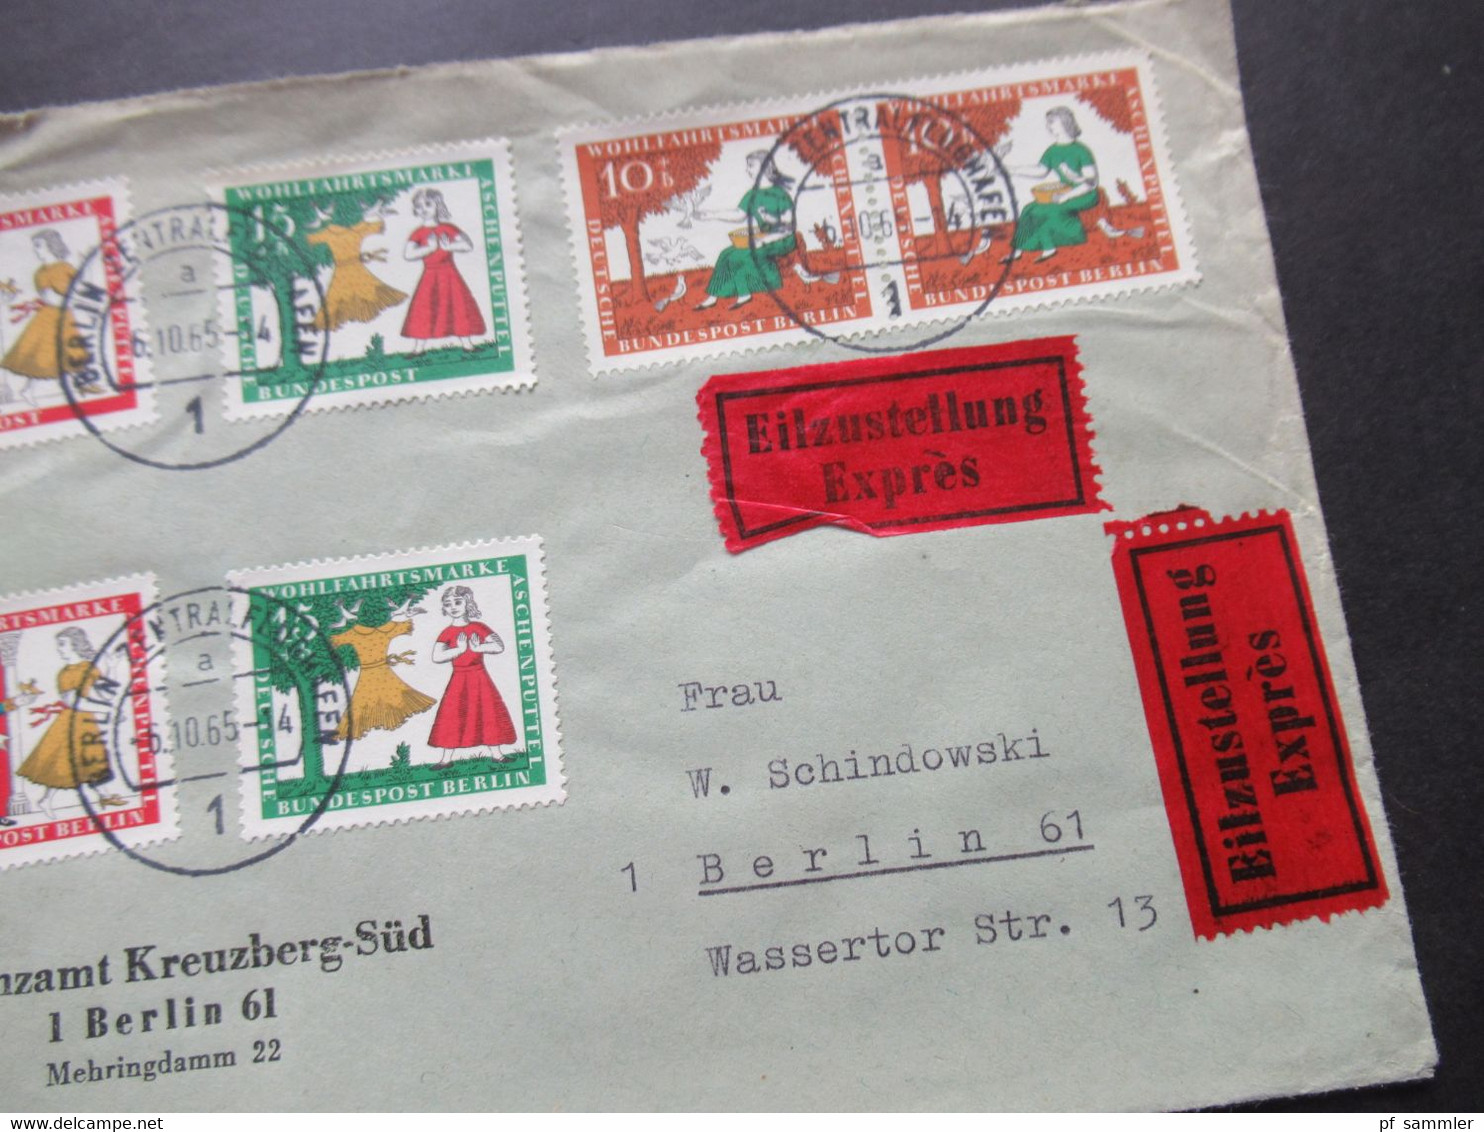 1965 Berlin (West) Wohlfahrt Märchen MiF Eilzustellung Expres Berlin Ortsbrief Stempel Berlin FA 1 / Finanzamt - Covers & Documents